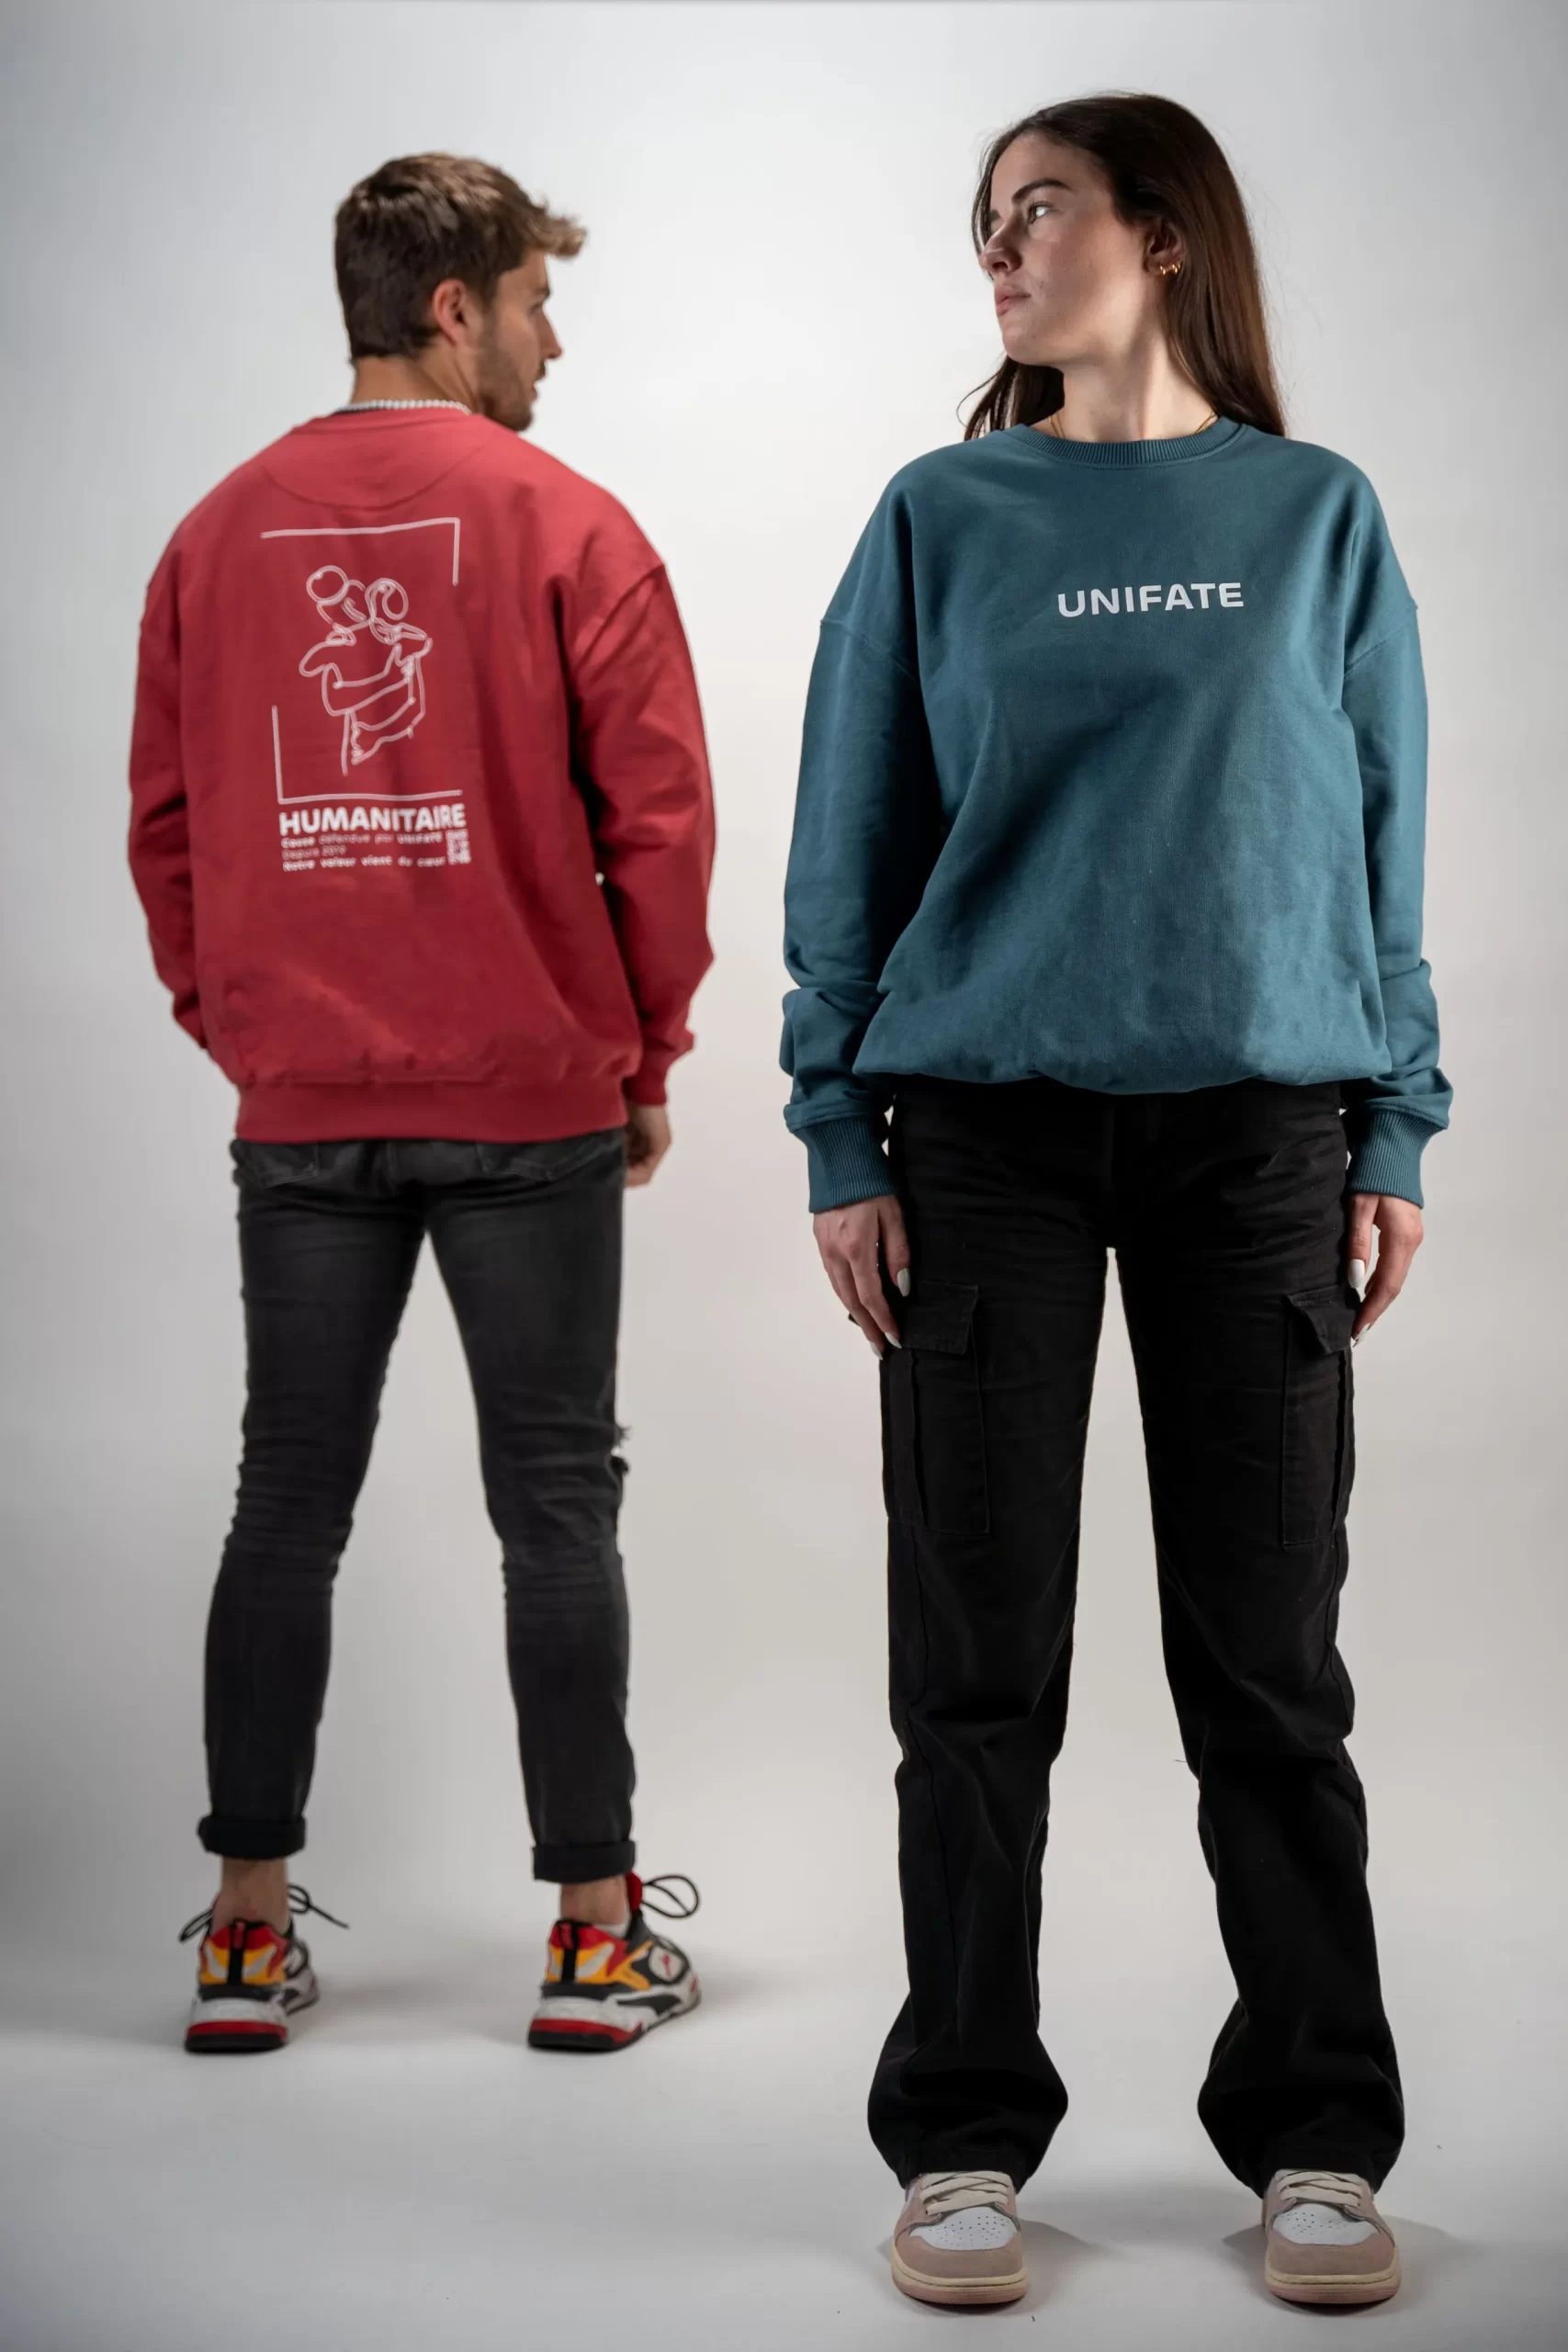 unifate-marque-vetements-bio-rennes-bretagne-nouvelle-collection-2023-sweat-pull-rouge-turquoise